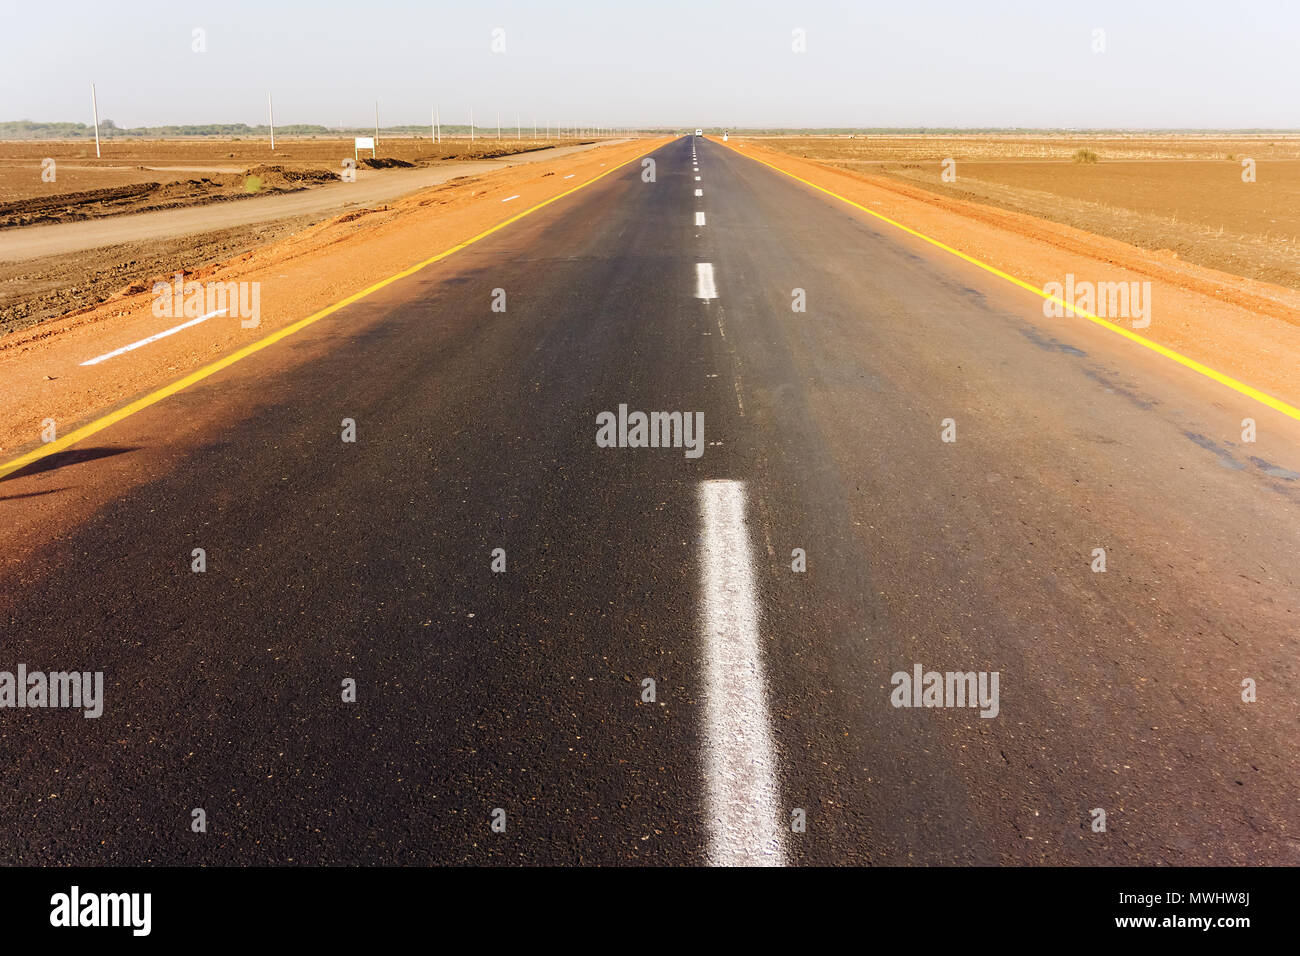 Tarmac road in the Sahara desert near Sennar in Sudan Stock Photo